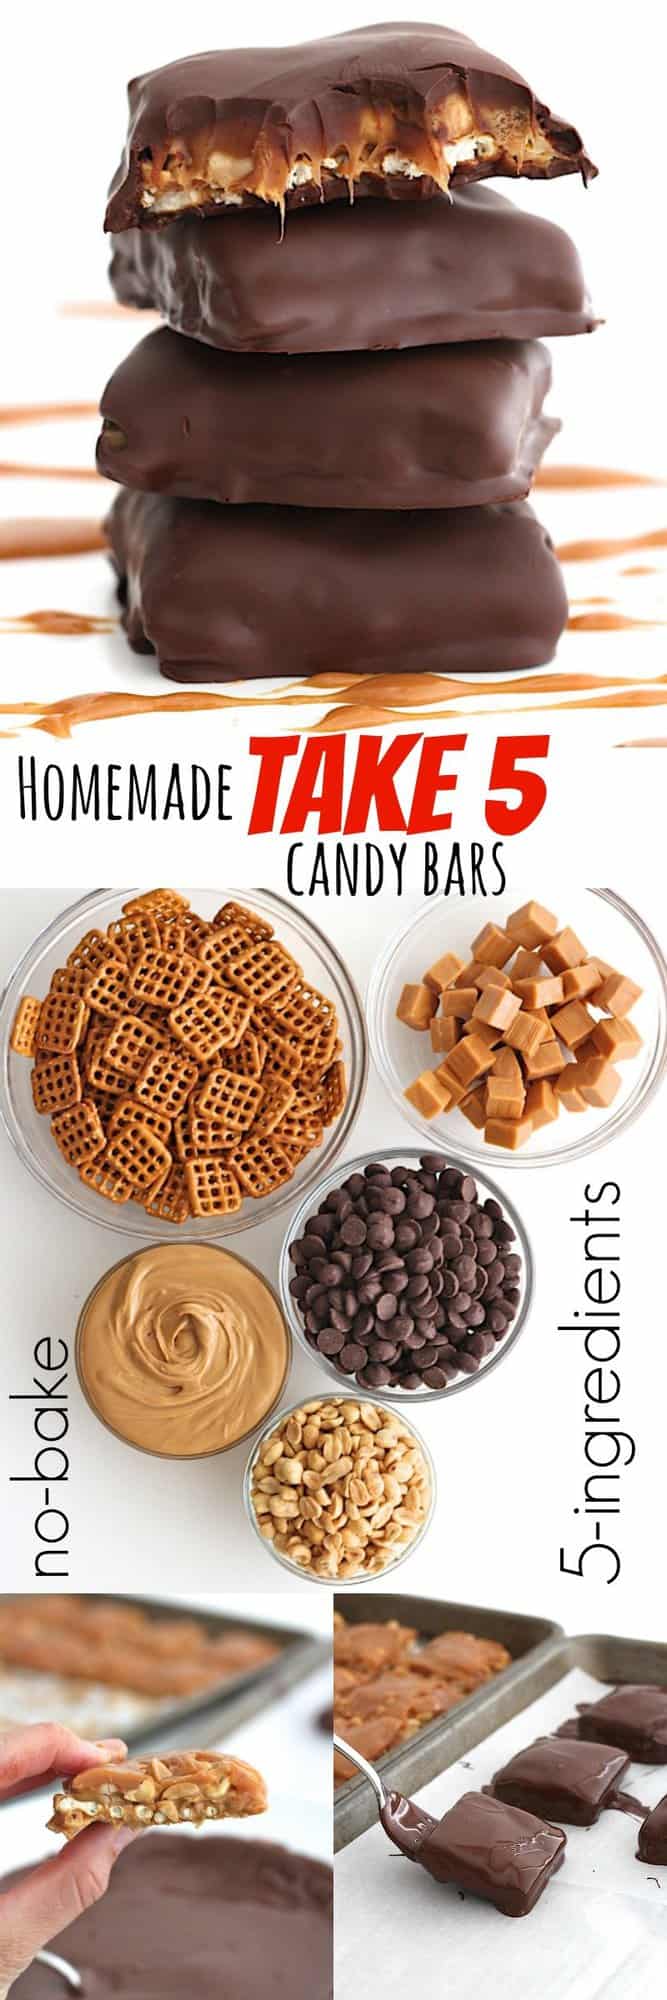 Homemade Take 5 Candy Bars {just 5-ingredients & no-bake}